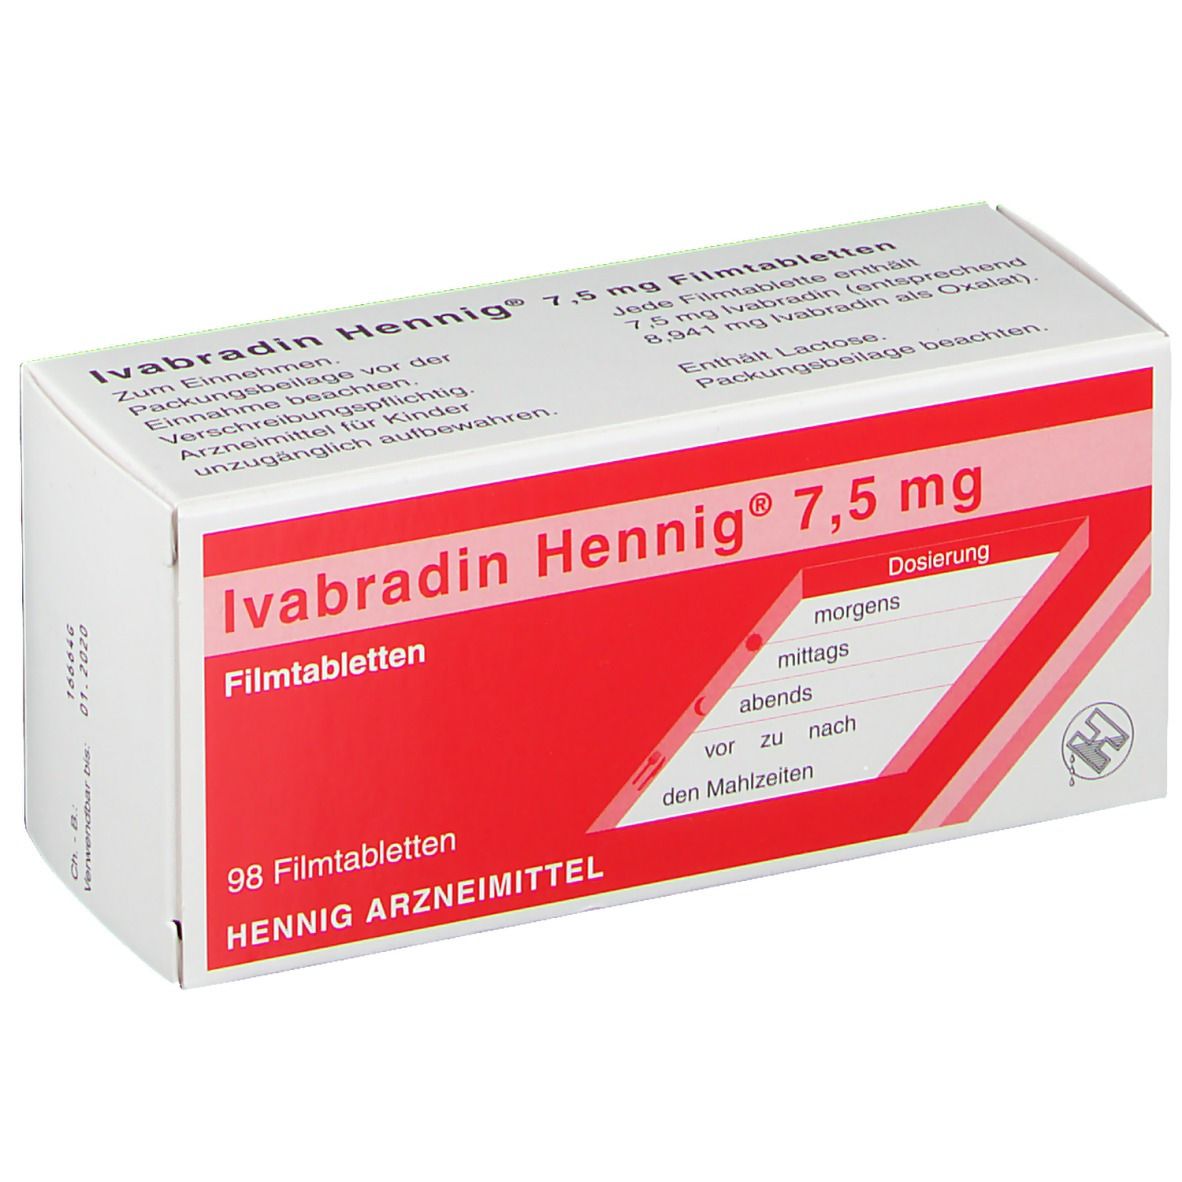 IVABRADIN Hennig 7,5 mg Filmtabletten